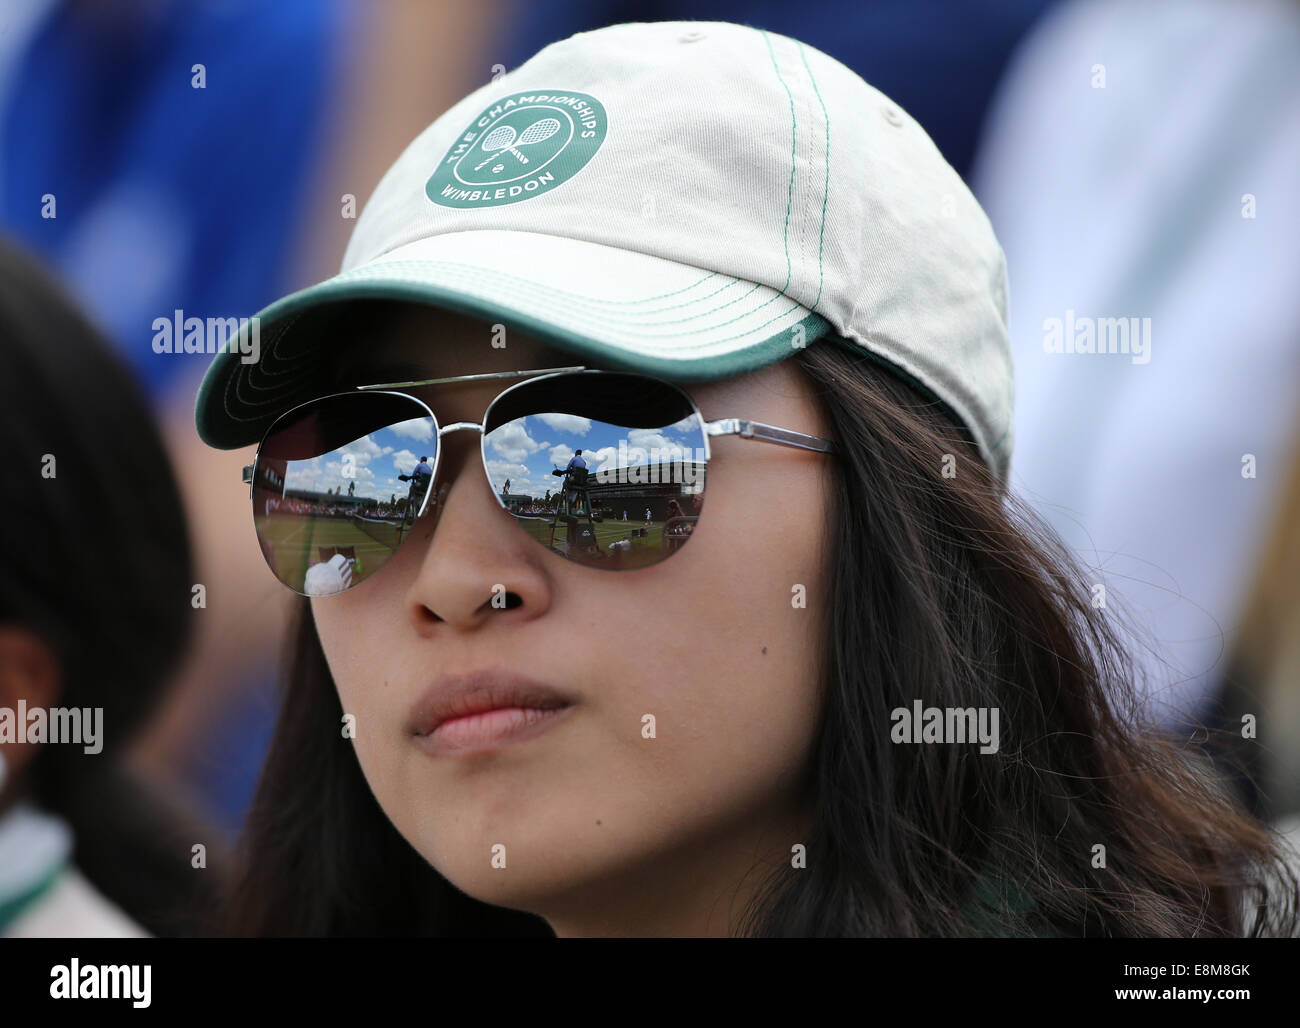 Female fan at the Wimbledon Championships,London, England. Stock Photo